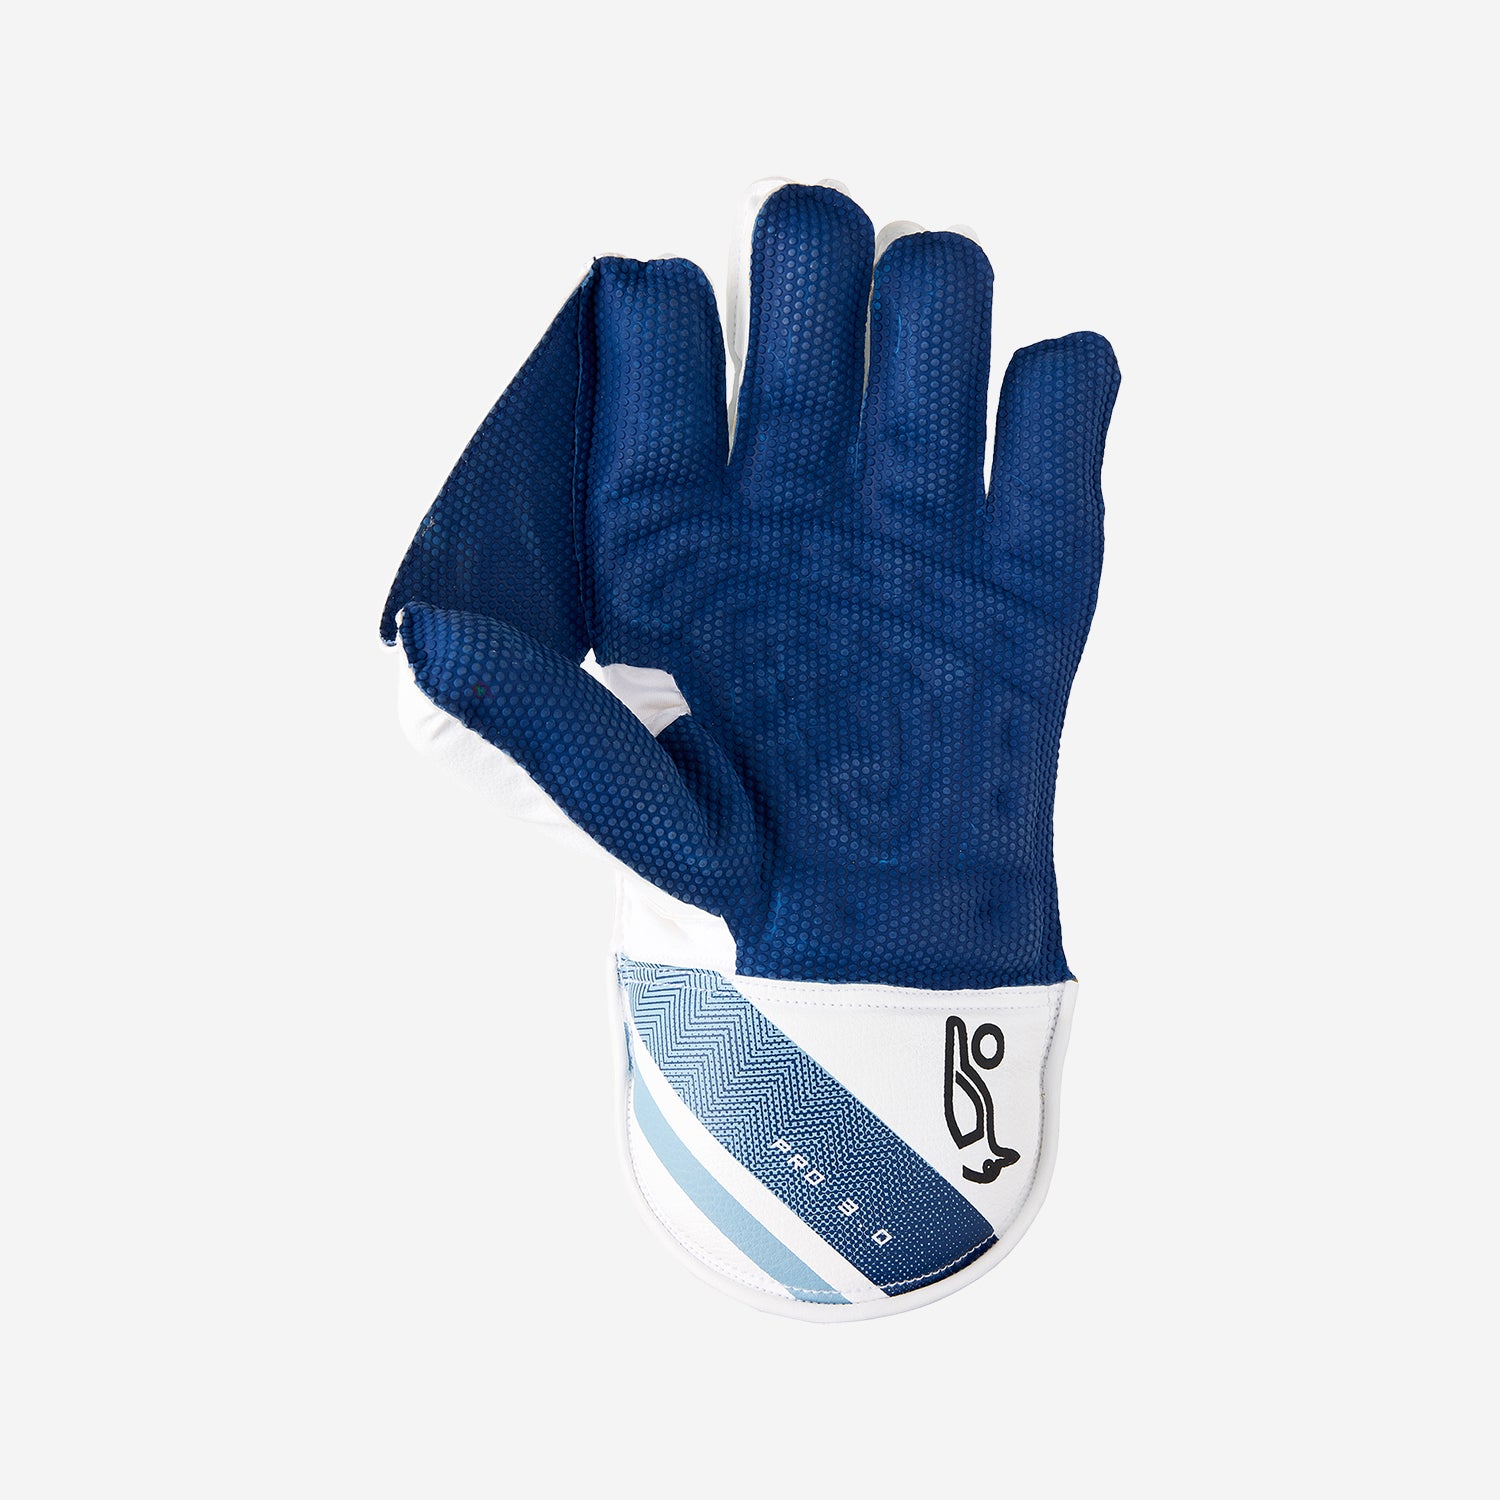 Kookaburra Empower Pro 3.0 Wicket Keeping Gloves